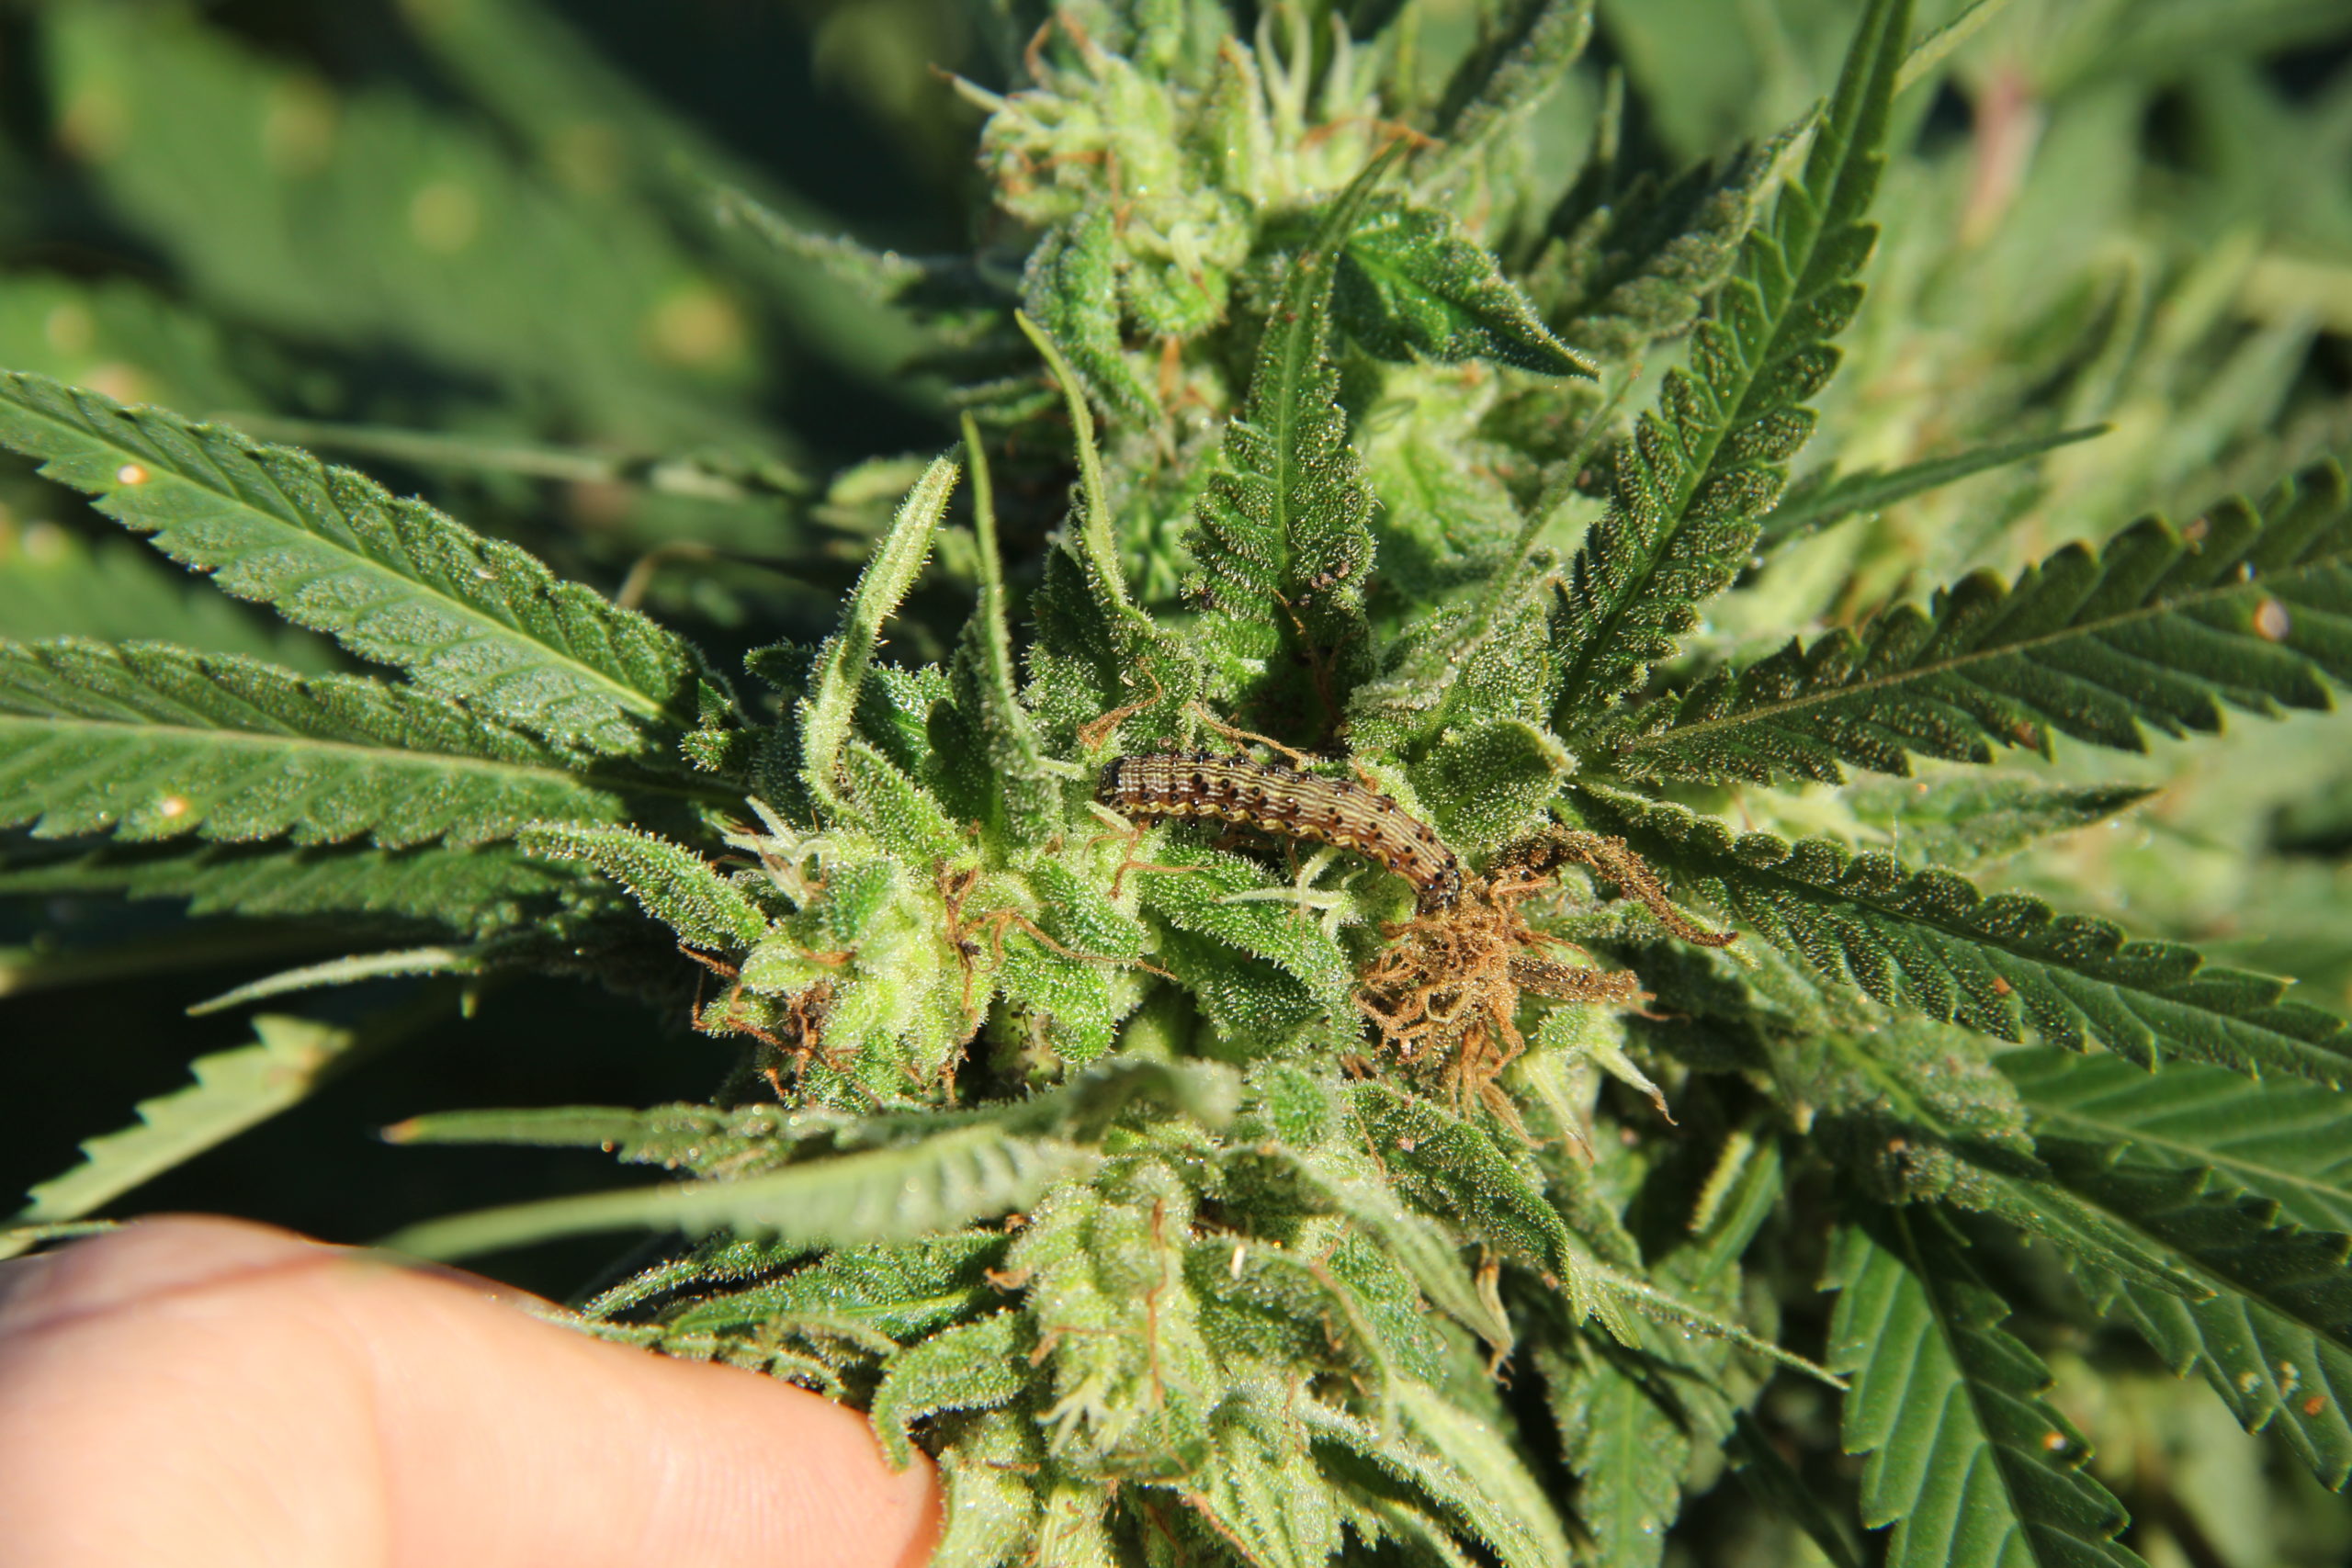 Image of a corn earworm on a cannabinoid hemp plant